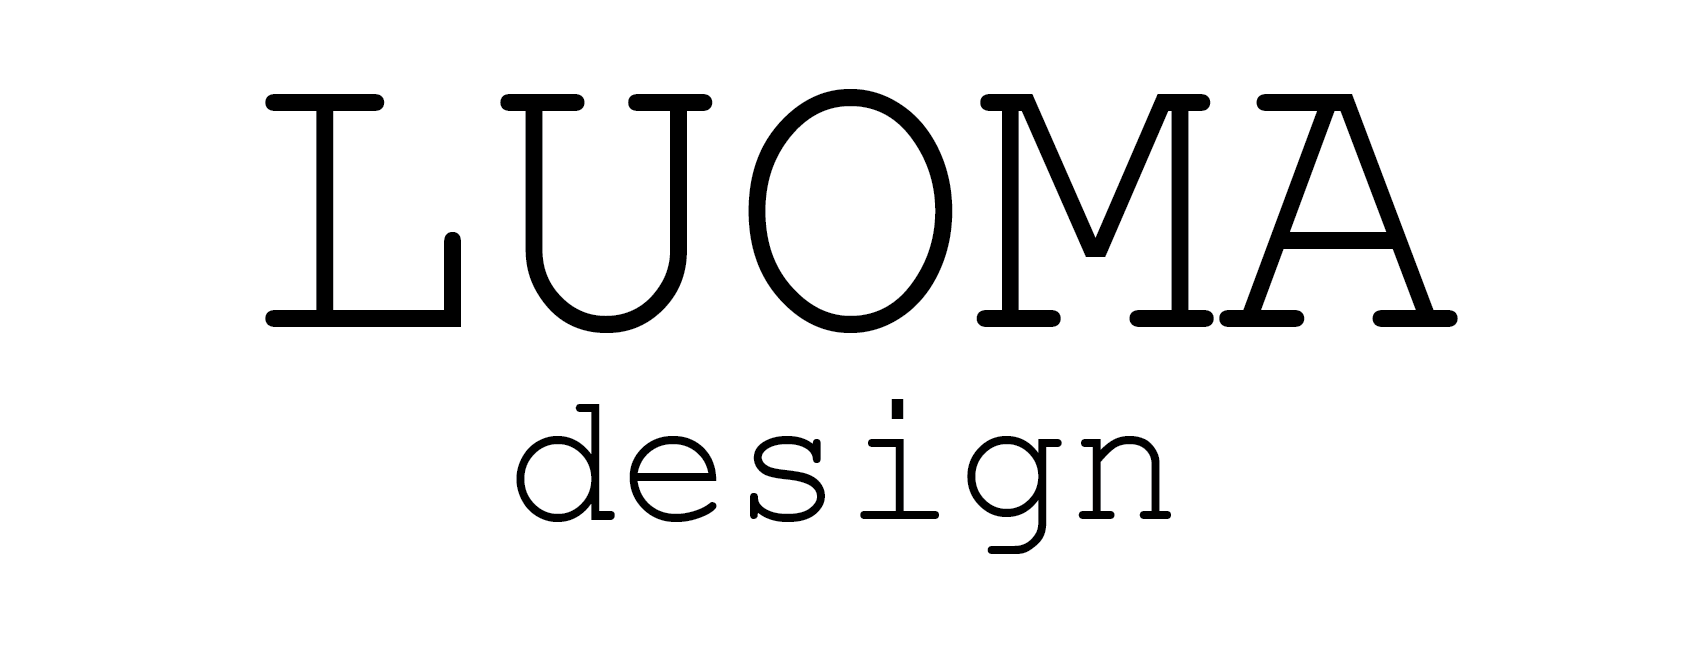 LUOMA design